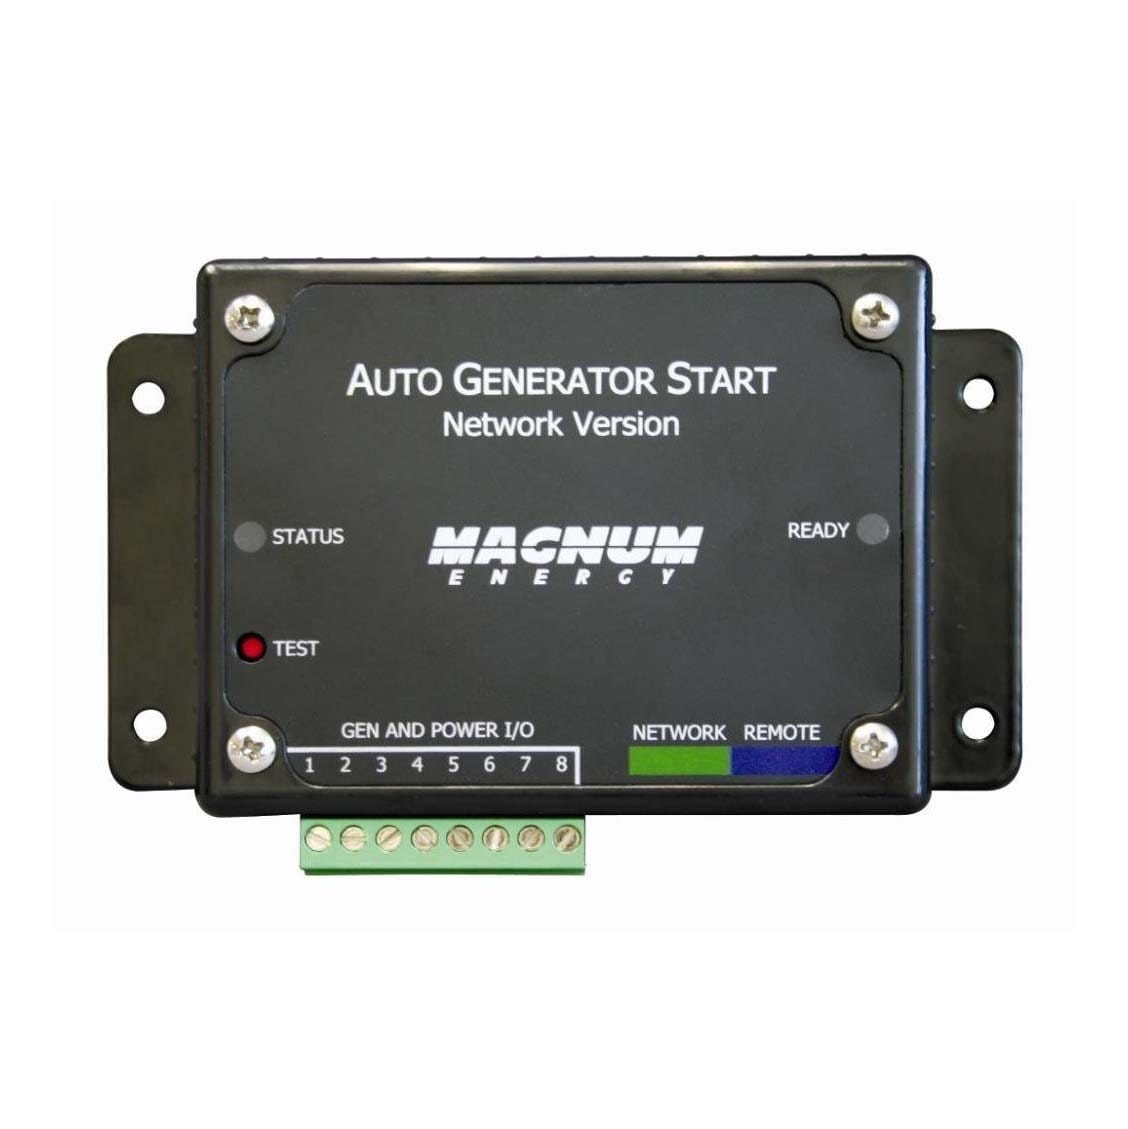 Magnum ME-AGS-N Generator Auto Start Module Network Version